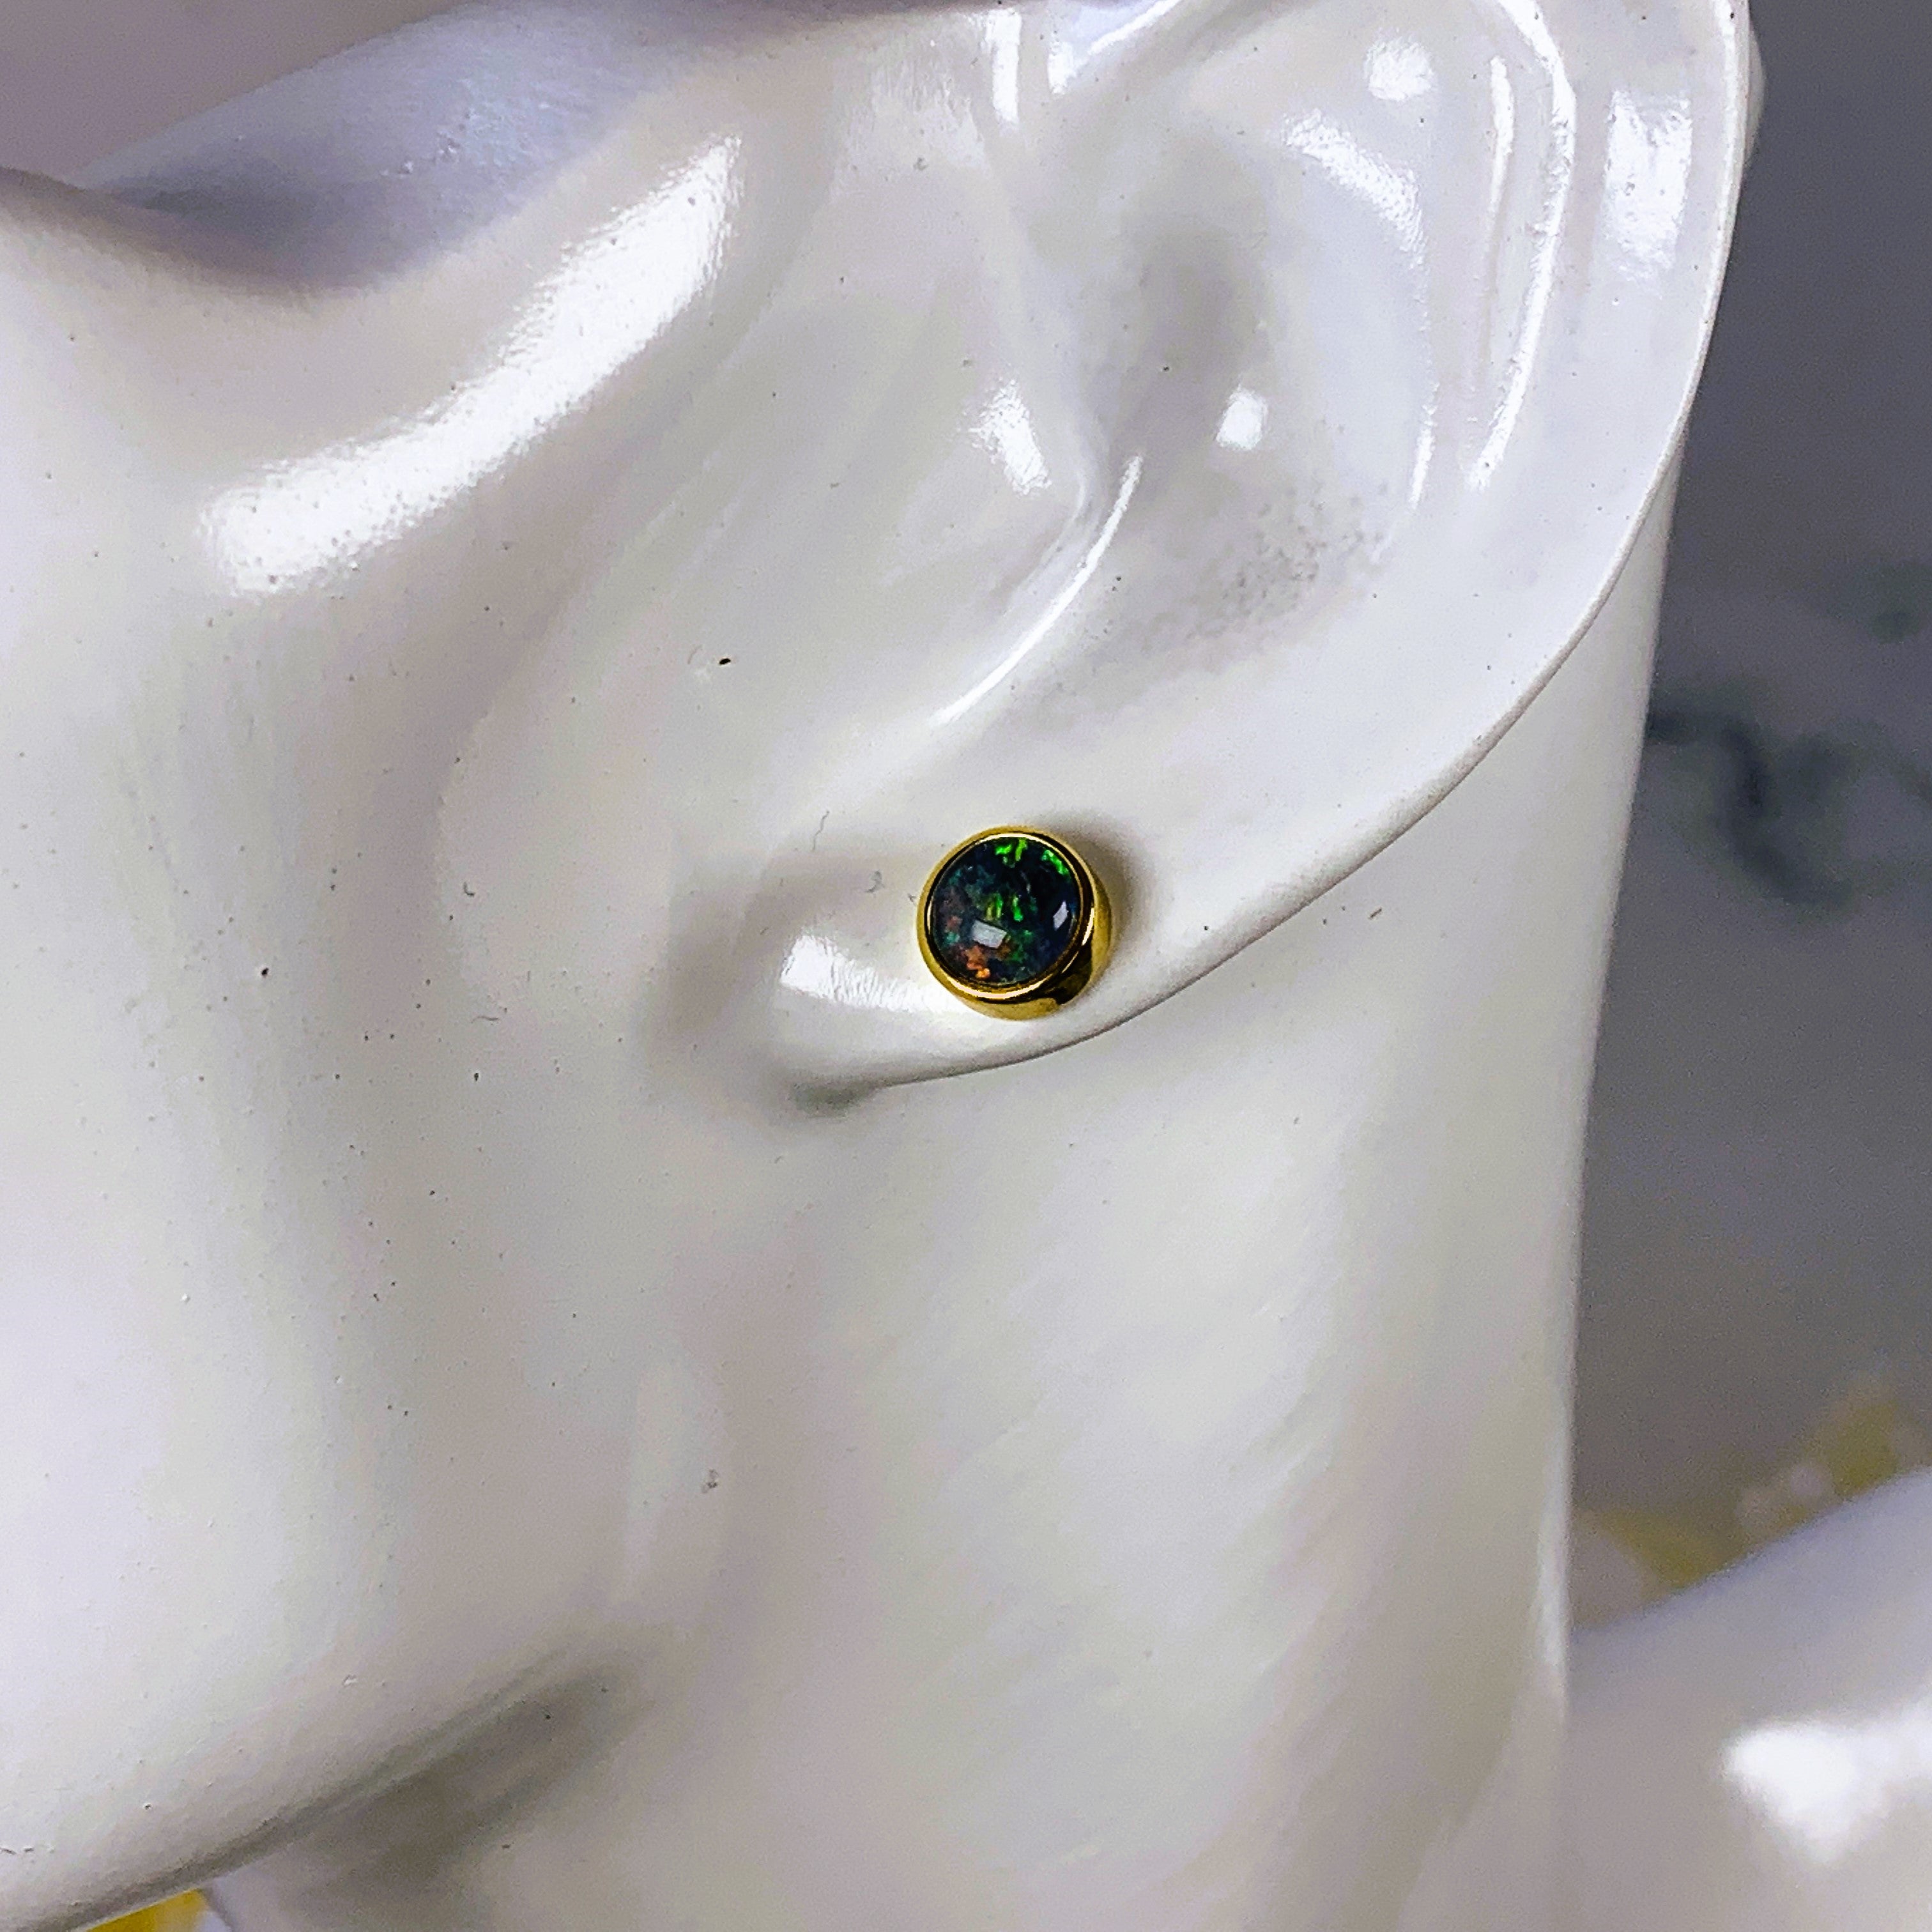 Gold plated Sterling Silver 6mm Round Triplet Opal studs - Masterpiece Jewellery Opal & Gems Sydney Australia | Online Shop